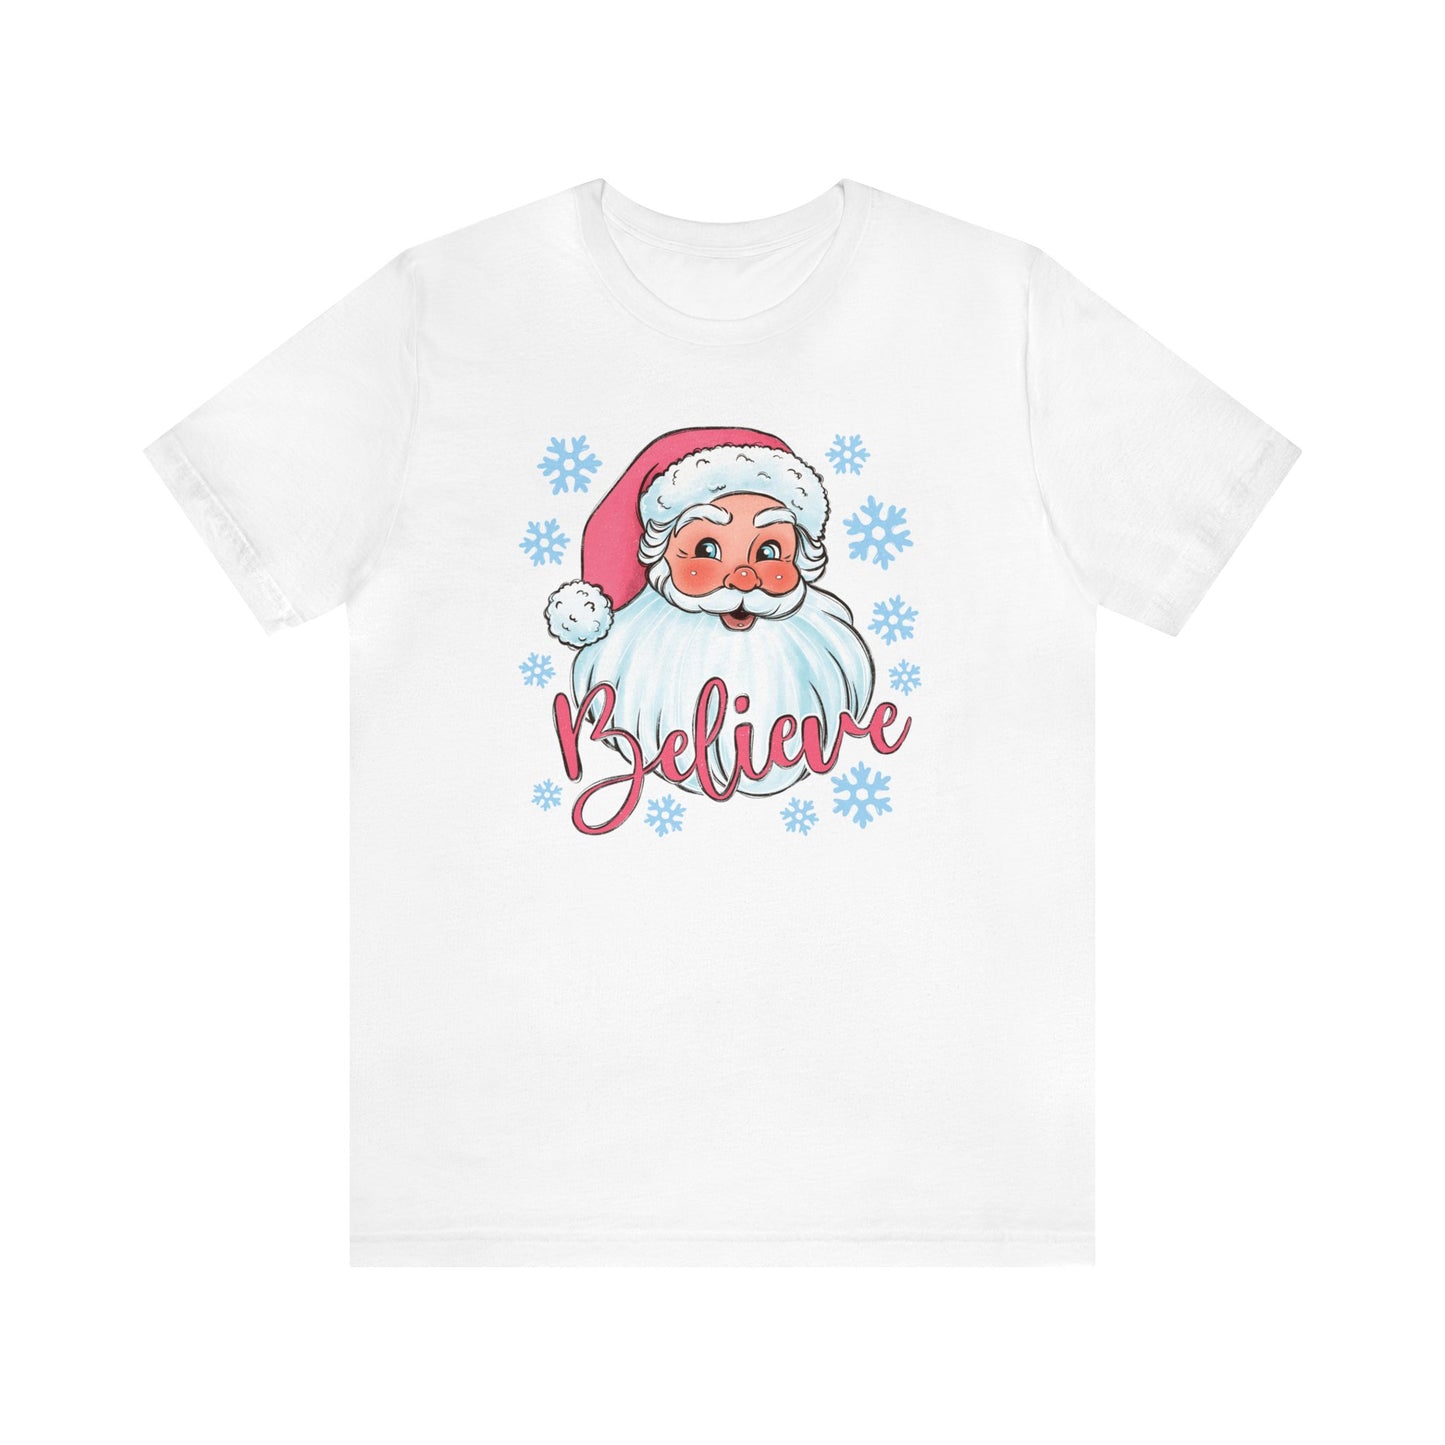 Believe Santa Christmas Shirt Short Sleeve Tee